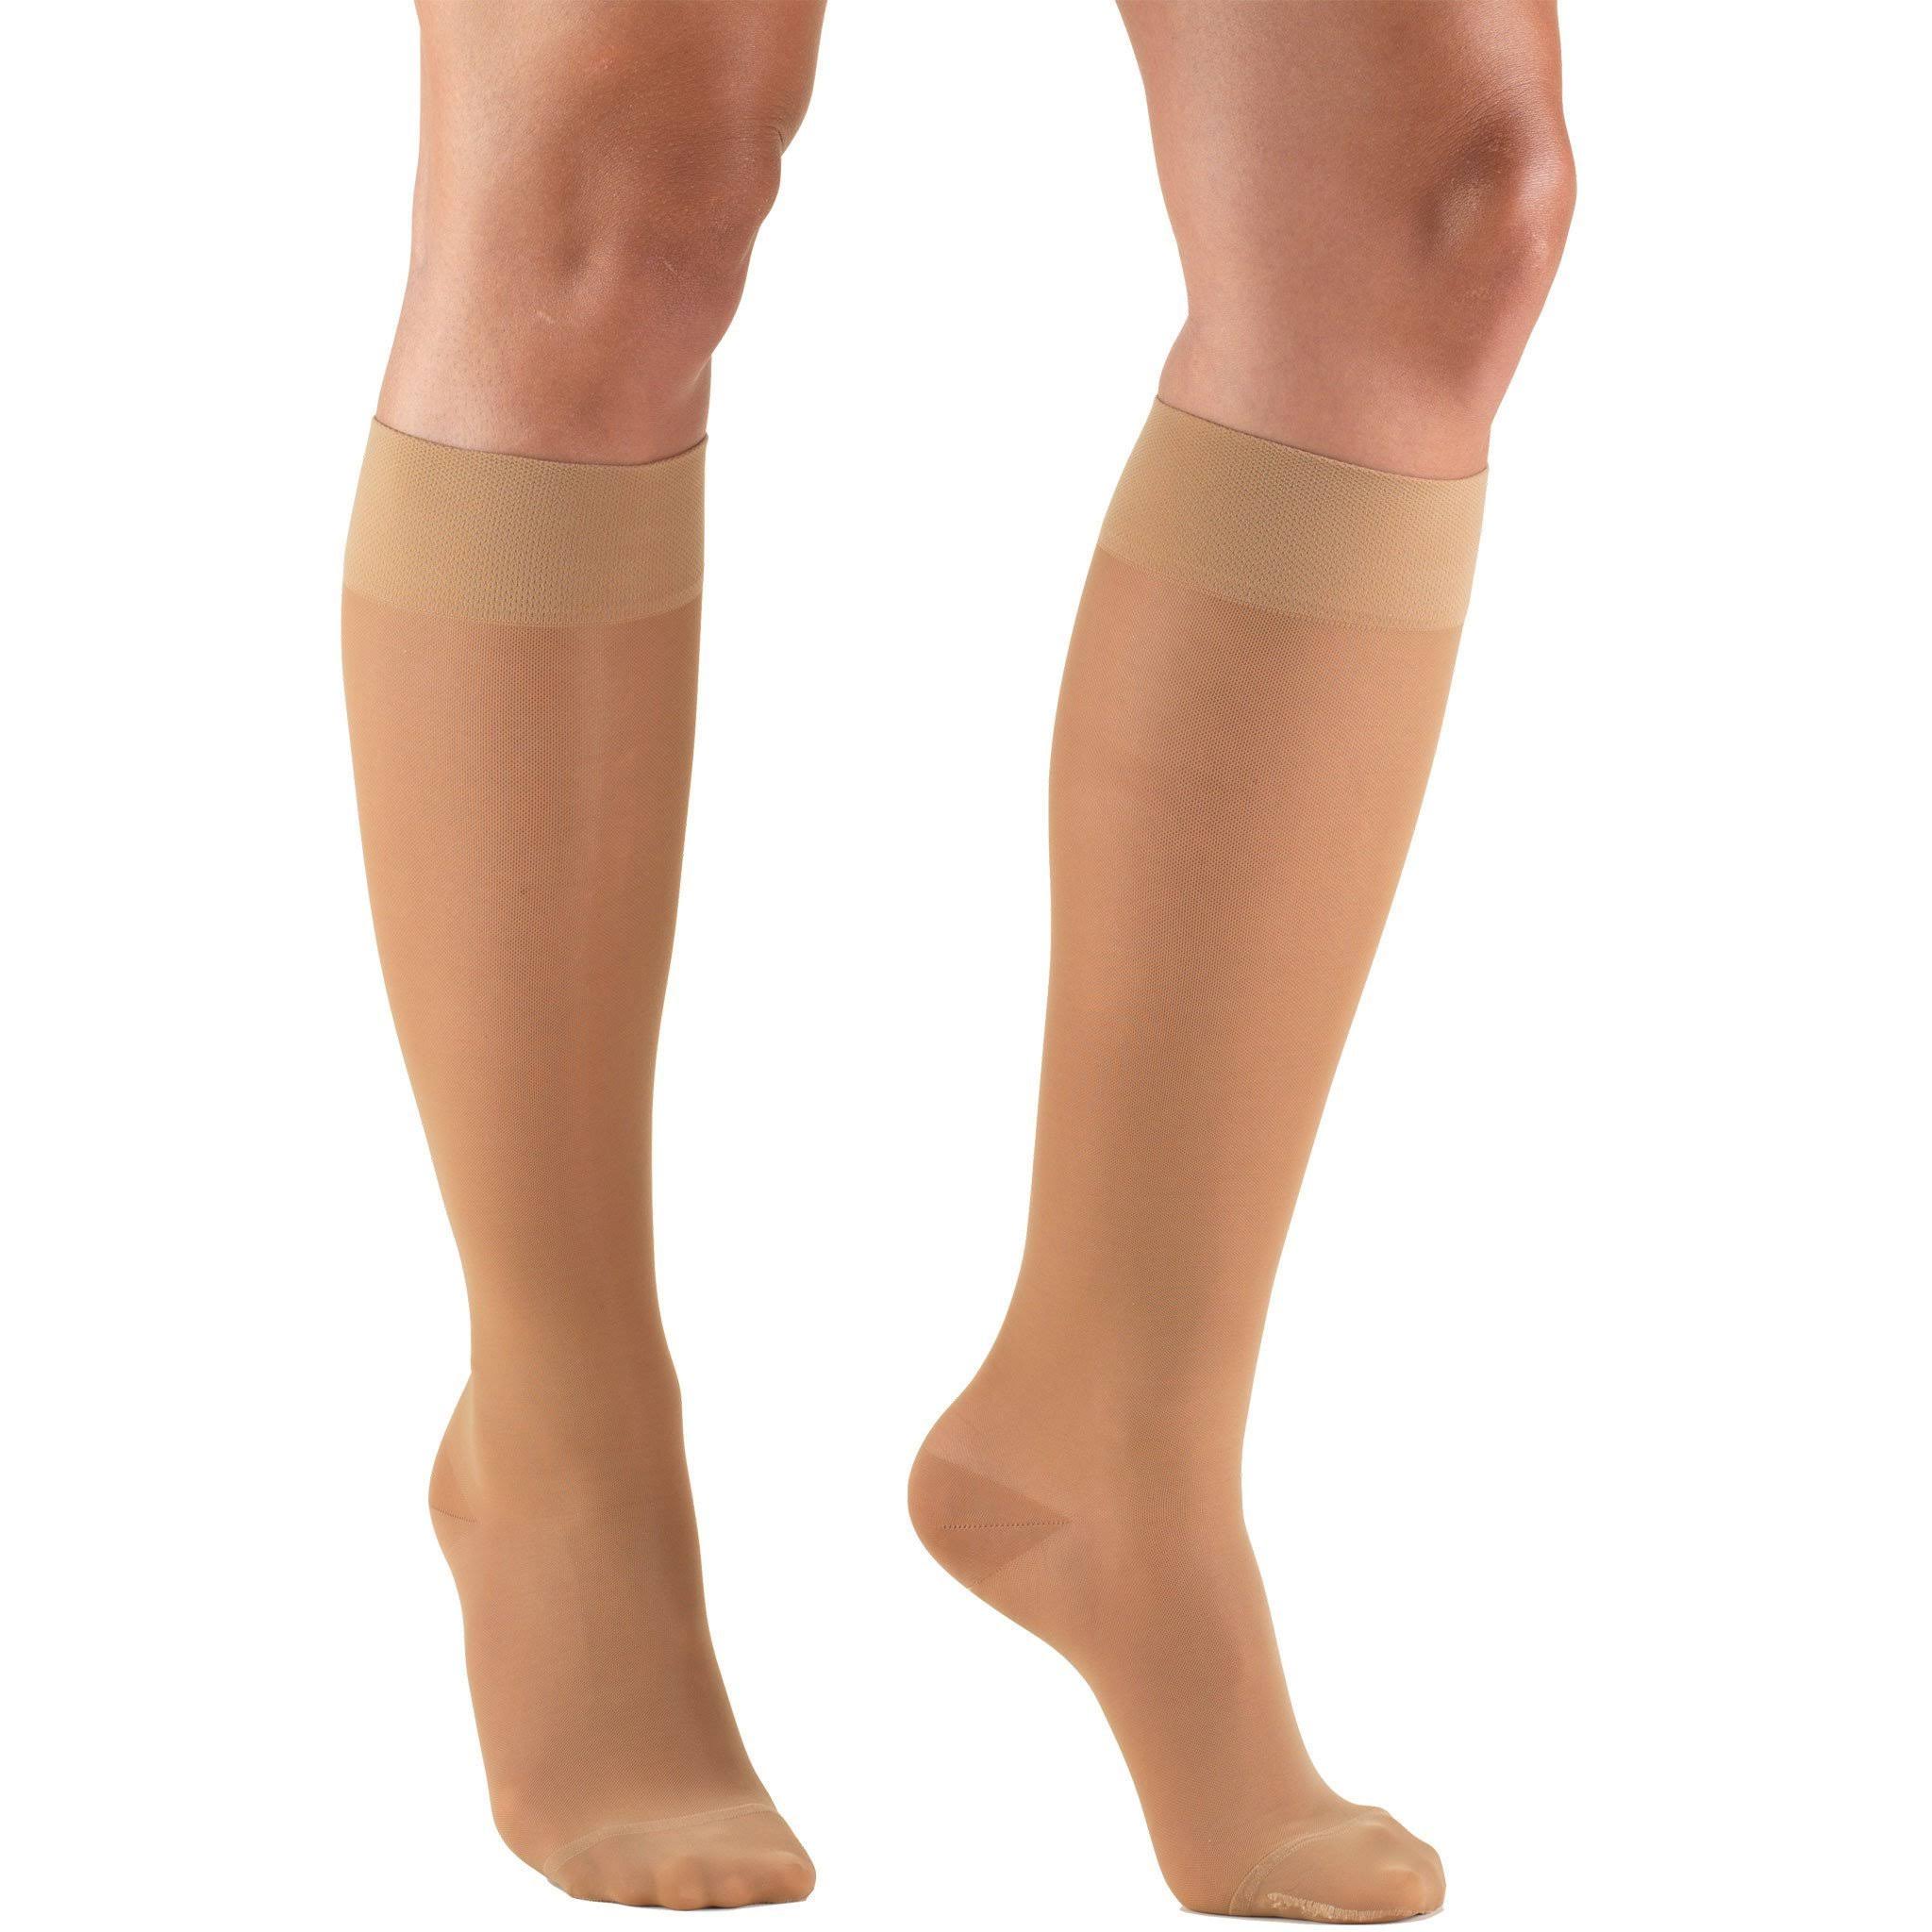 Truform Womens Sheer Knee High Compression Stockings - Beige, 2X-Large, 15-20mmHg